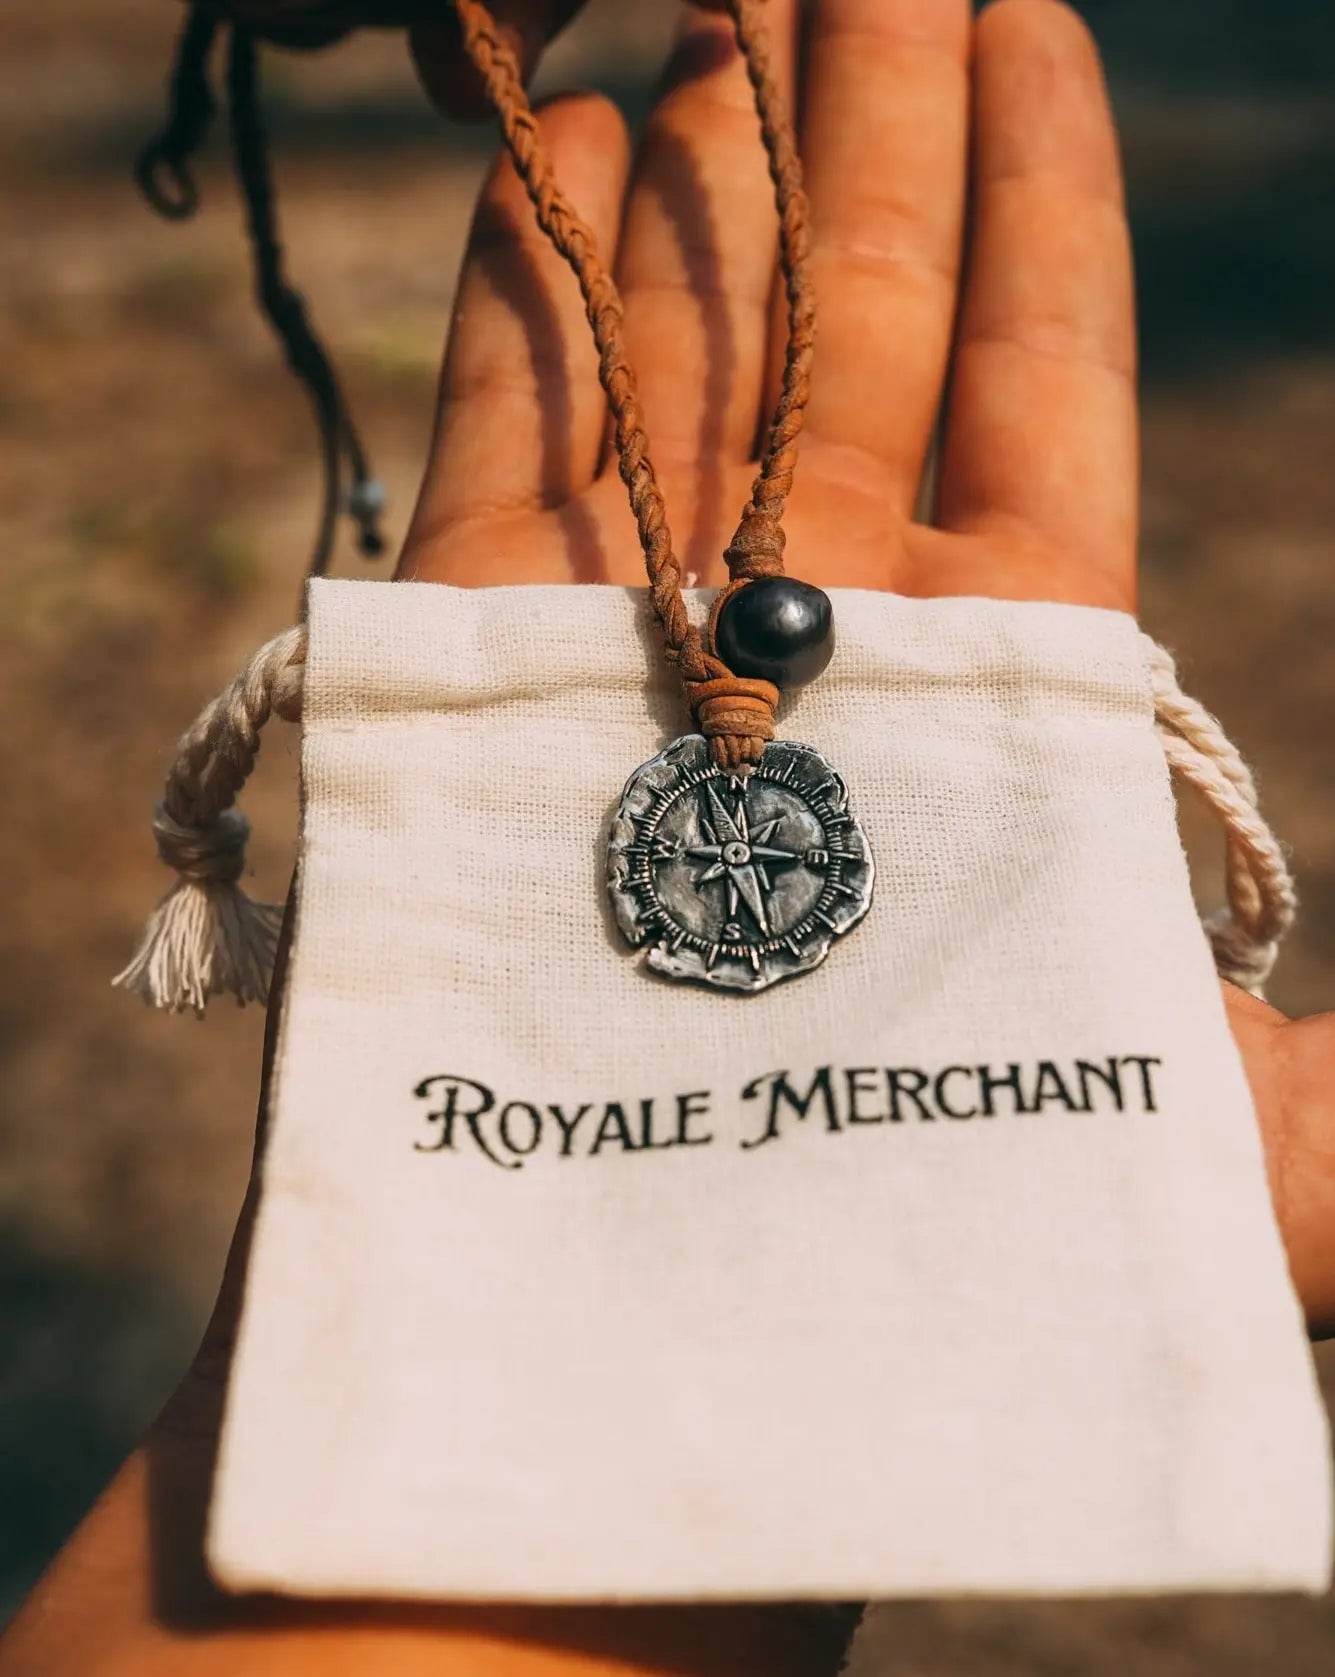 The Compass Coin Royale Merchant